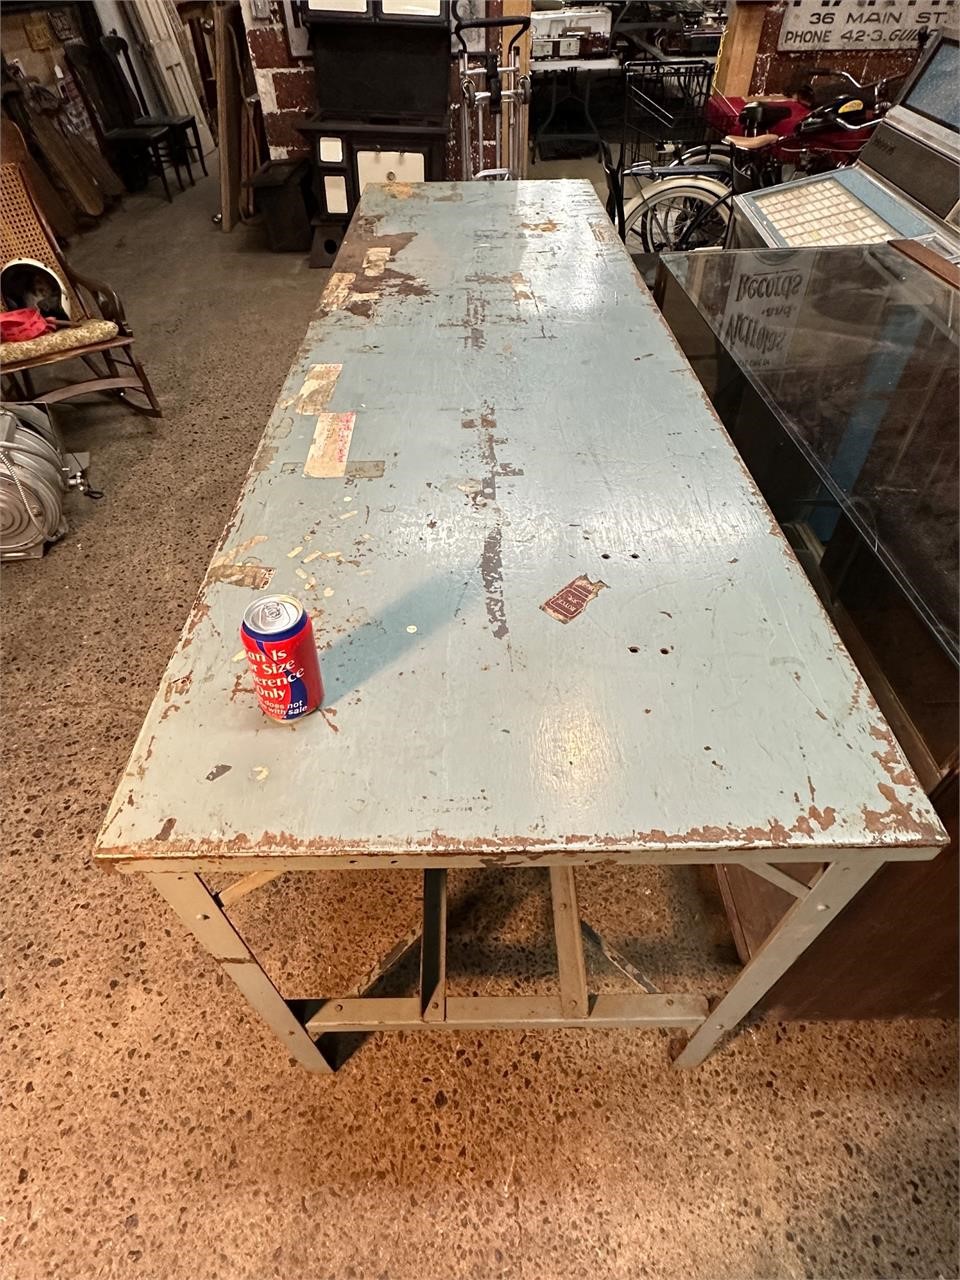 Vintage Metal Workbench Industrial Table w Drawer